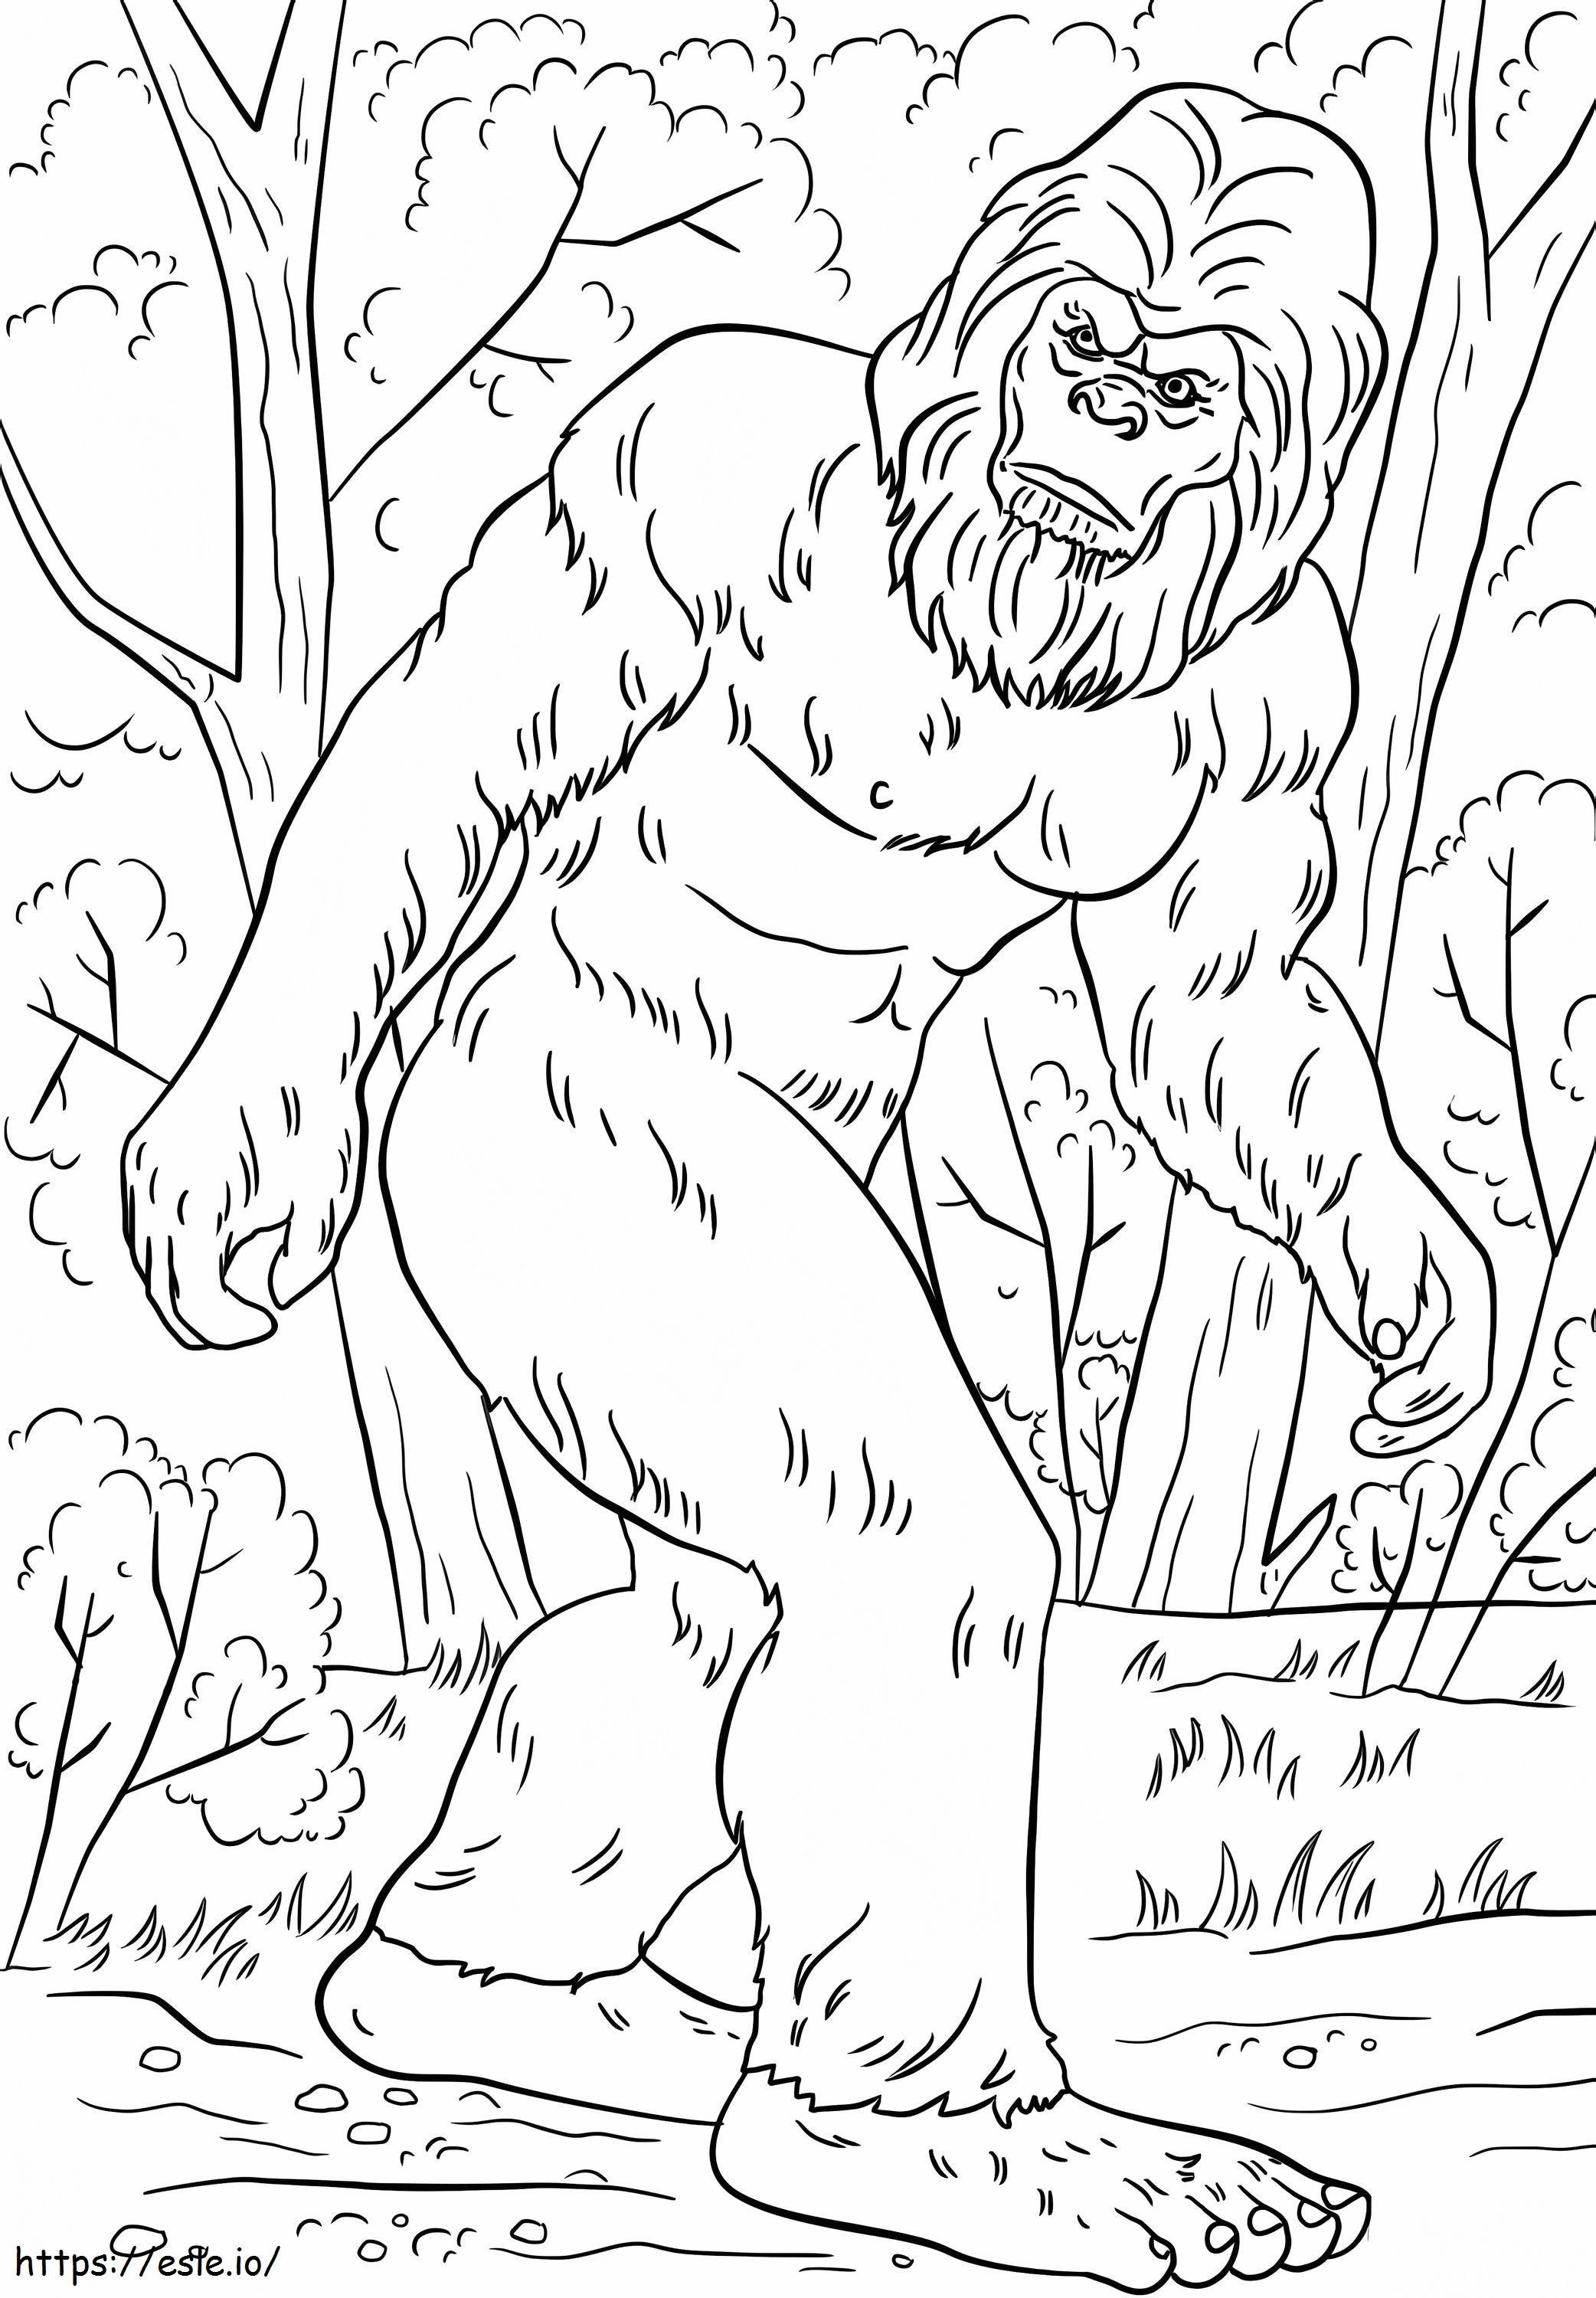 1545009017 Bigfoot coloring page